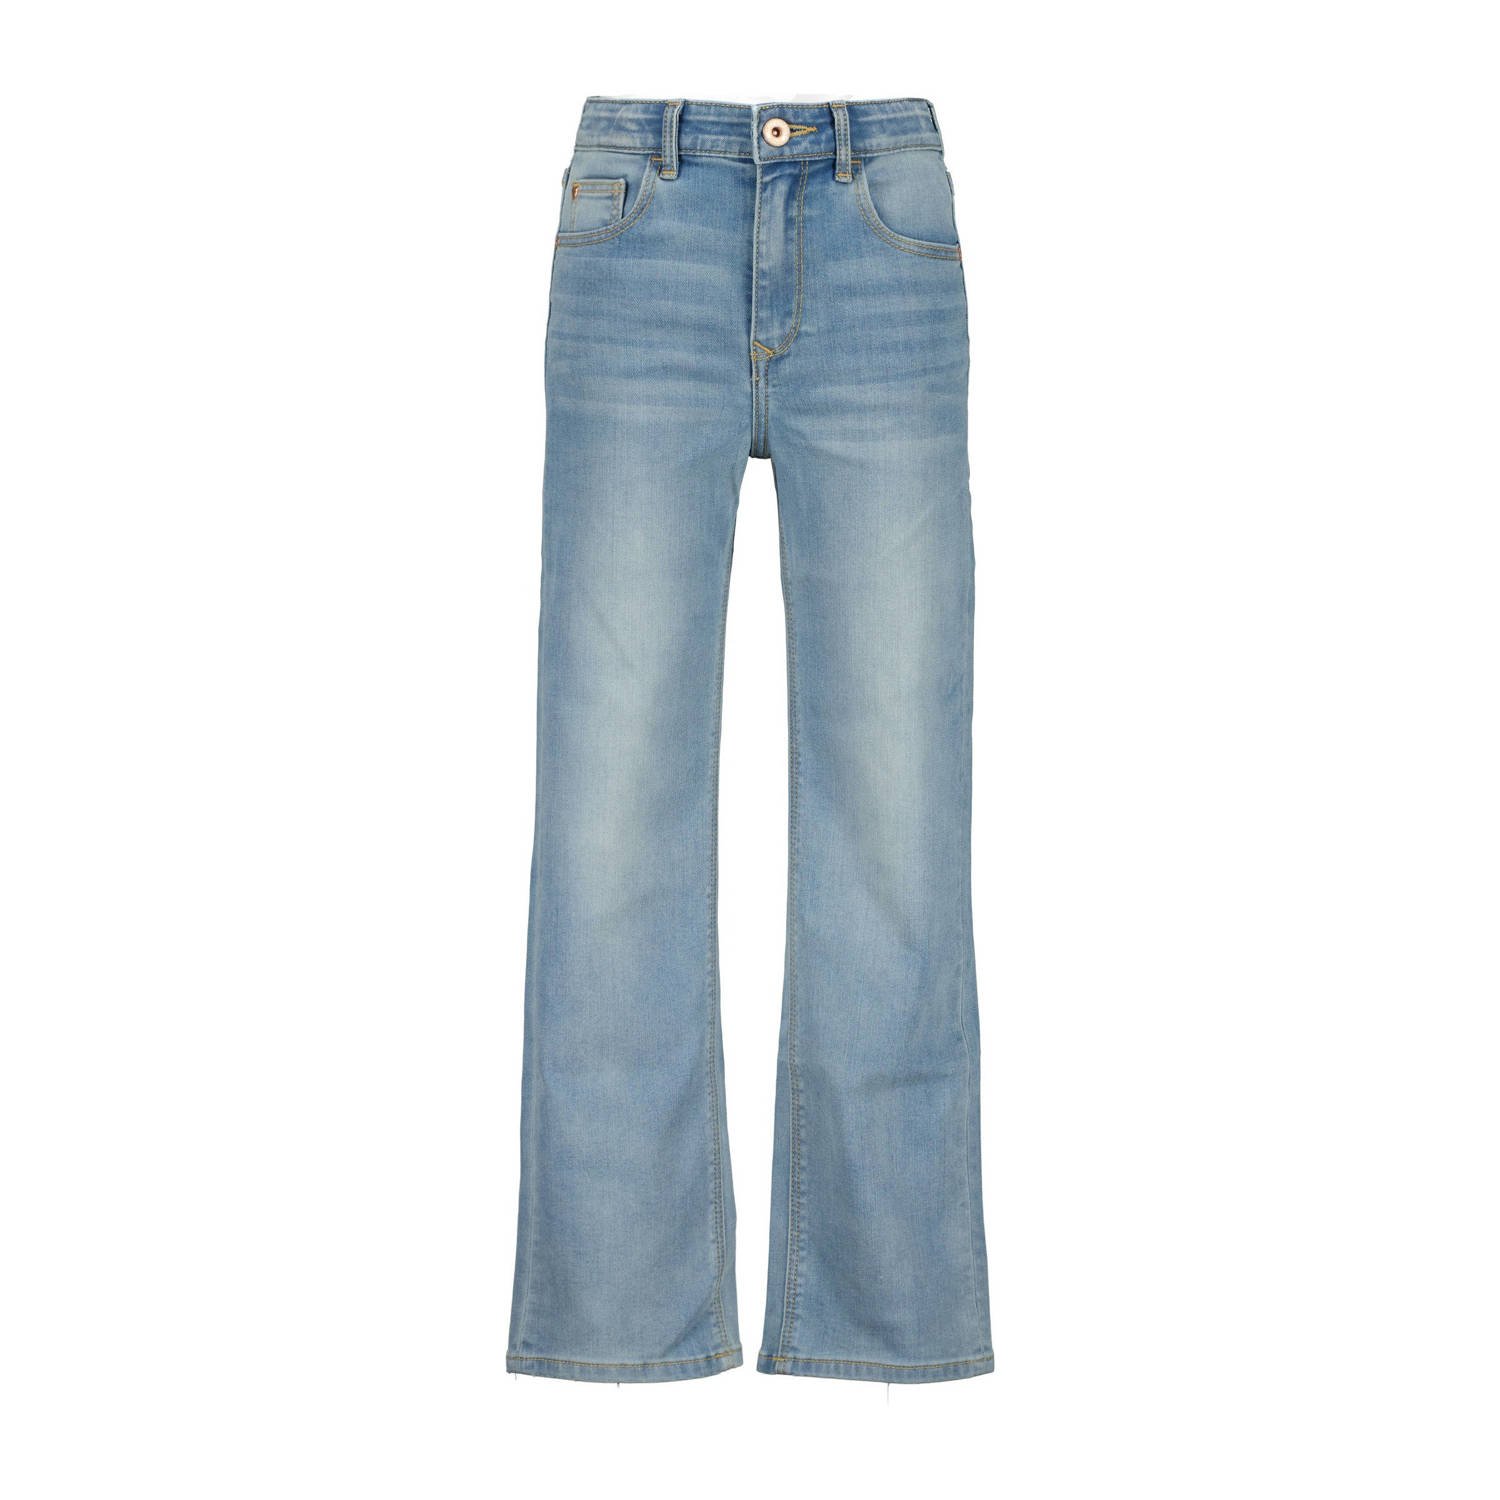 VINGINO high waist loose fit jeans GIULIA light vintage Blauw Meisjes Denim 140